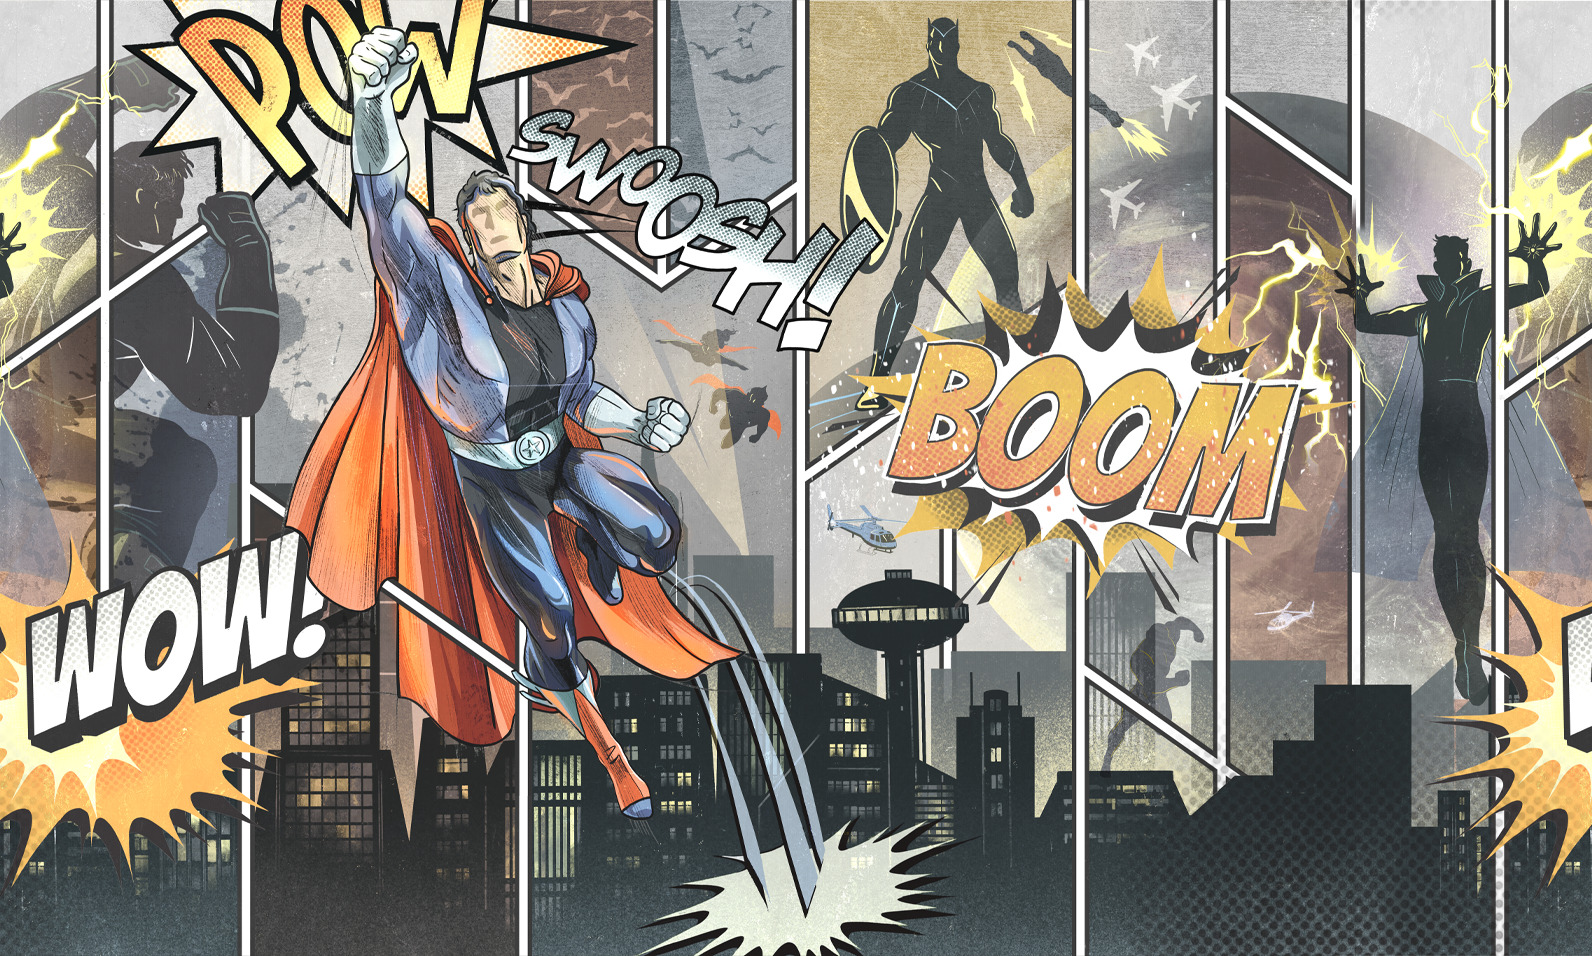 Komiksowa tapeta z różnymi superbohaterami